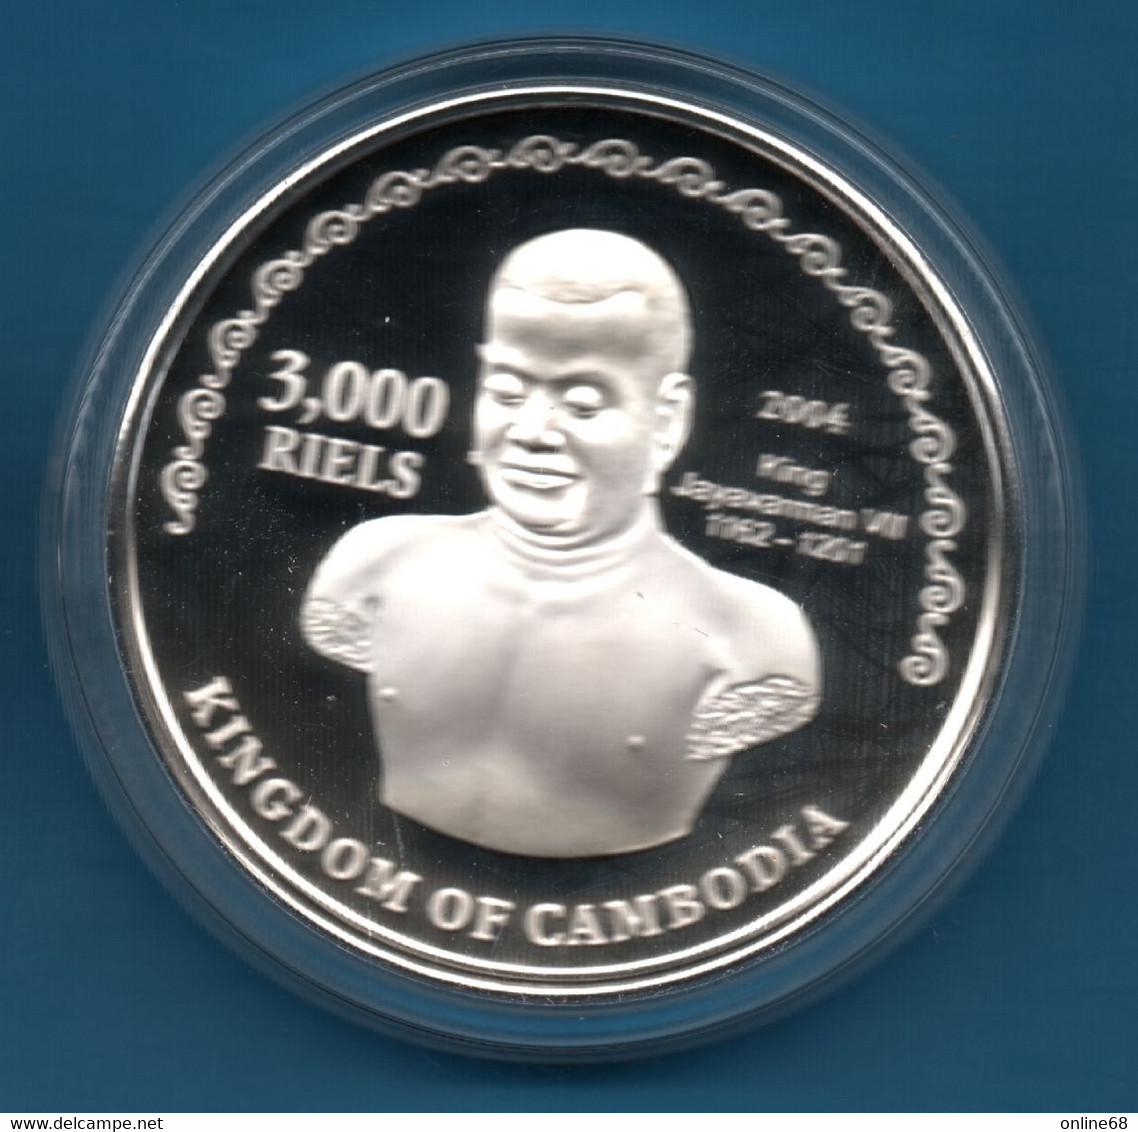 CAMBODIA 3000 RIELS 2004 KM# 139 Silver .999 Argent 2006 FOOTBALL World Cup KING JAYAVAIMAN VII - Cambogia